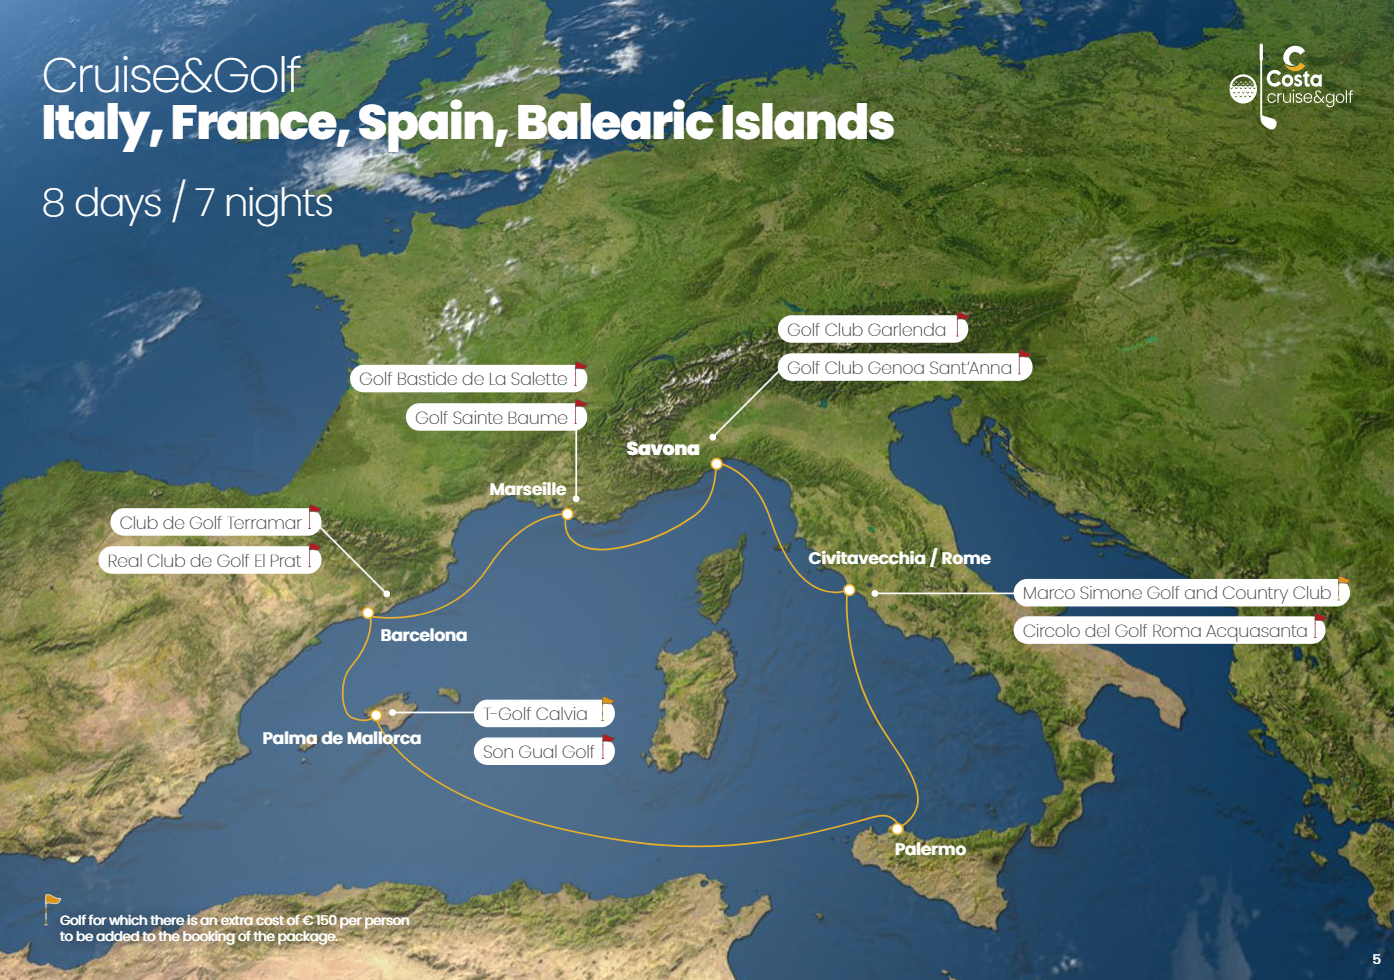 Costa Cruises - Cruise & Golf Italy, France, Spain, Balearic Islands